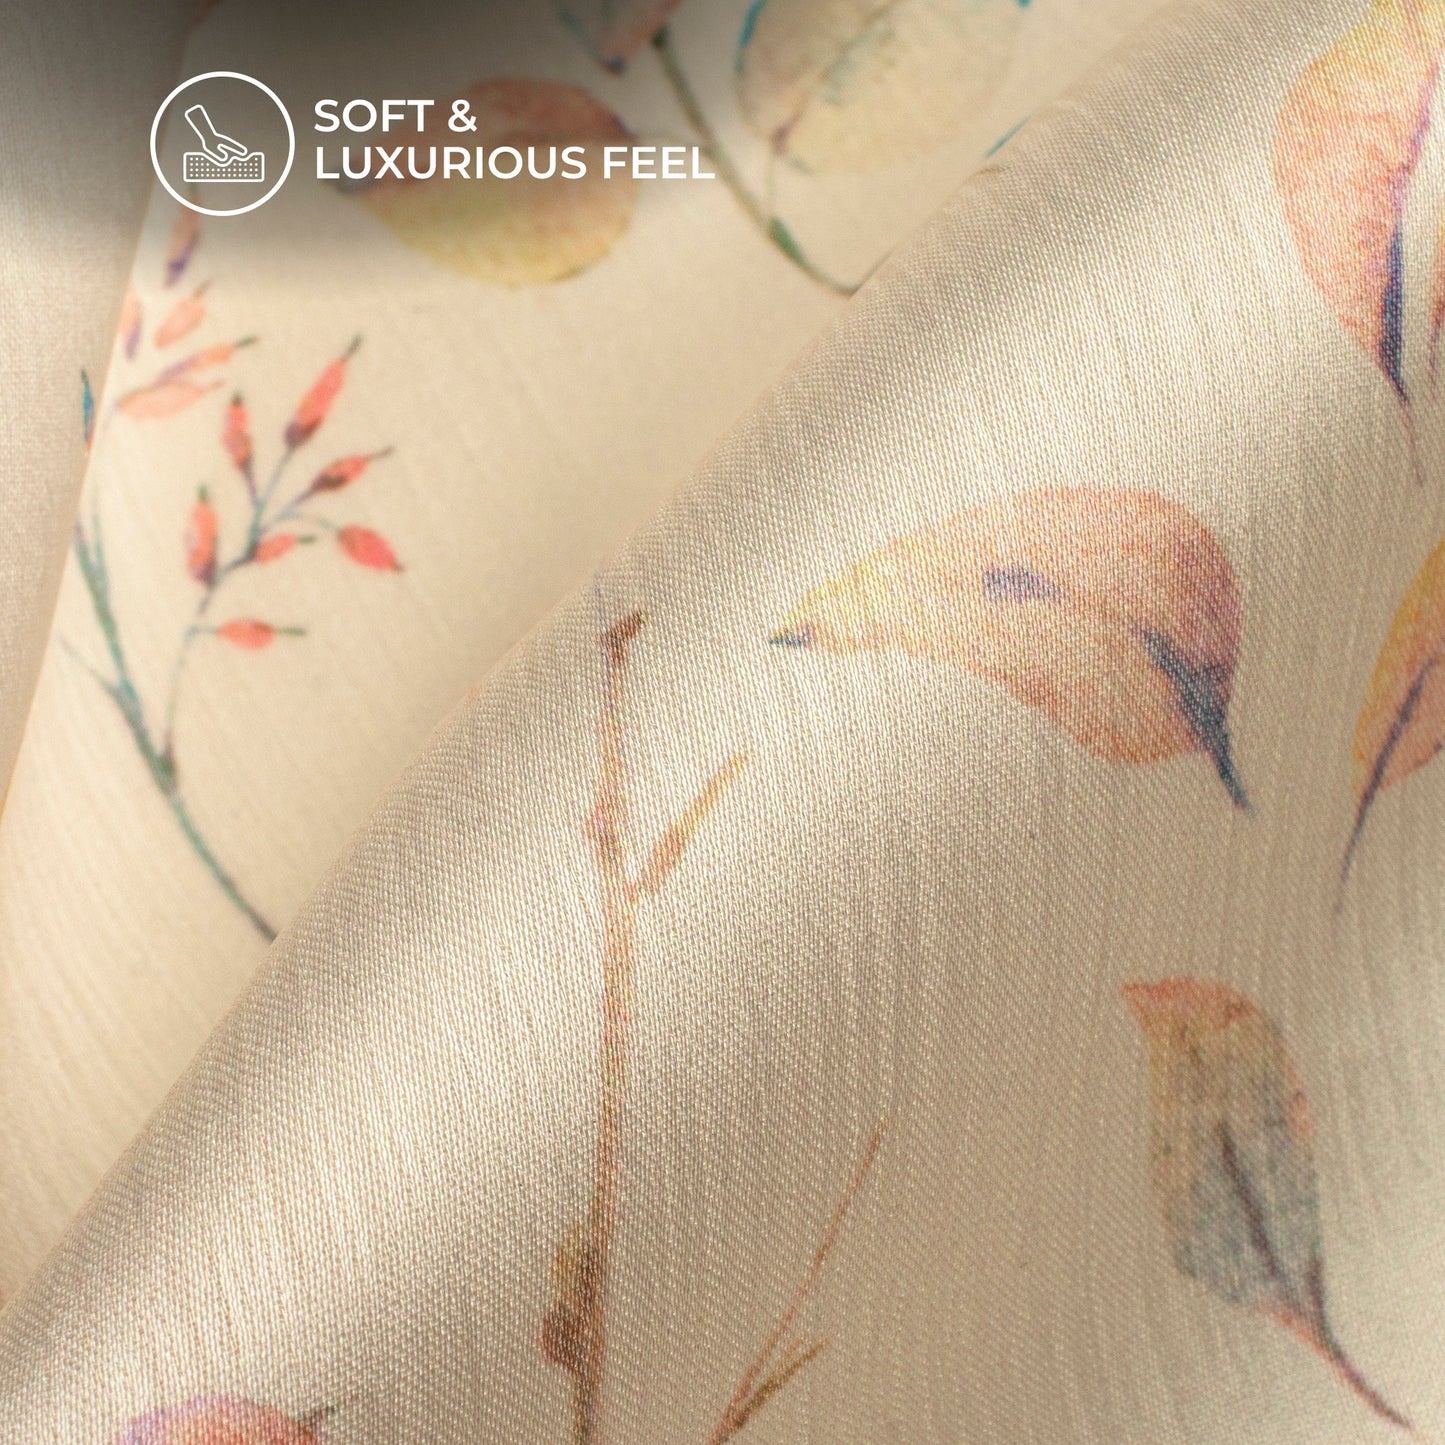 Creamy Floral Digital Print Chiffon Satin Fabric